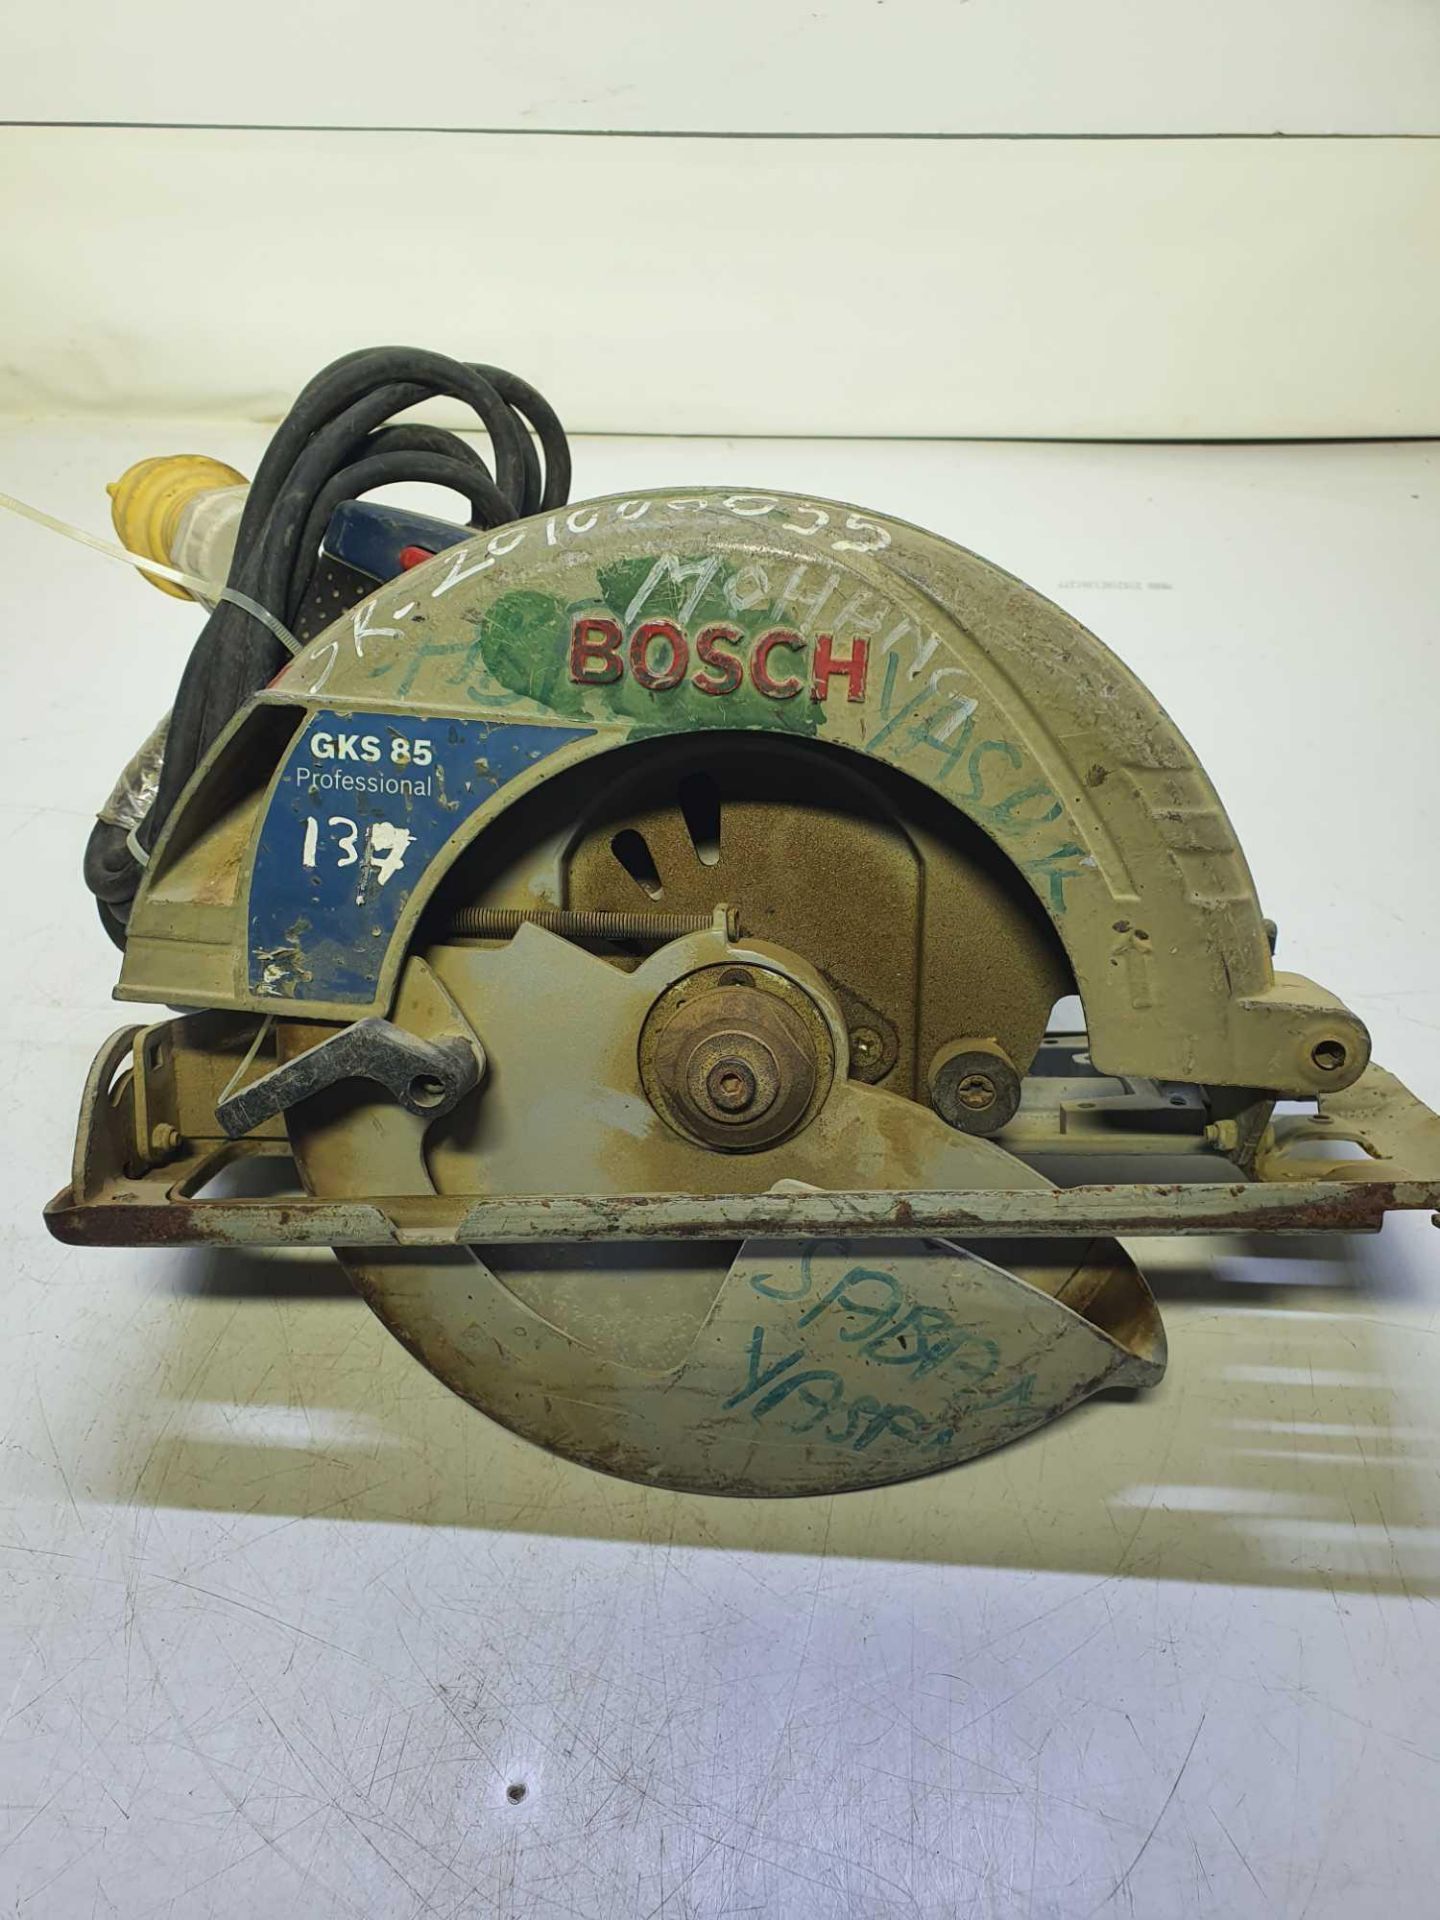 Bosch 110v circular saw